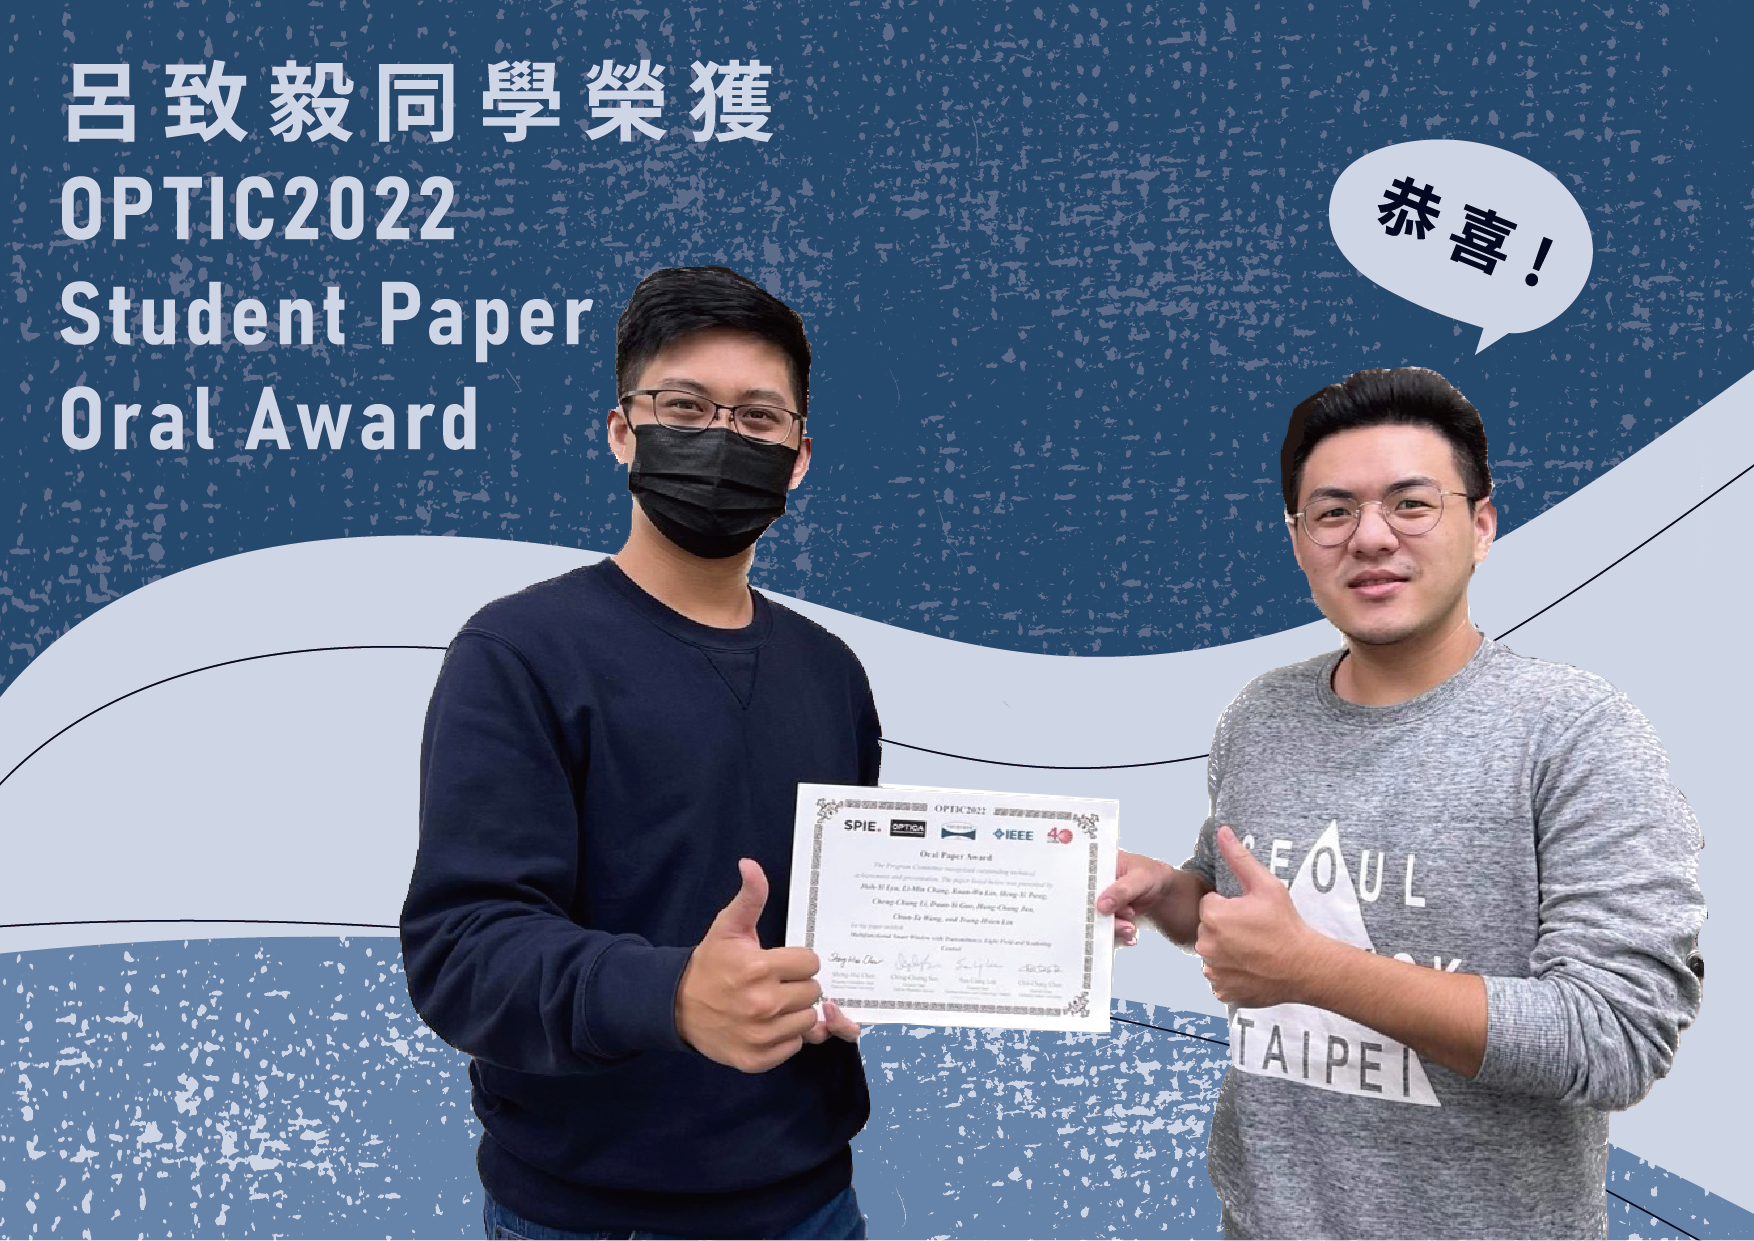 OPTIC2022 Student Paper Oral Award